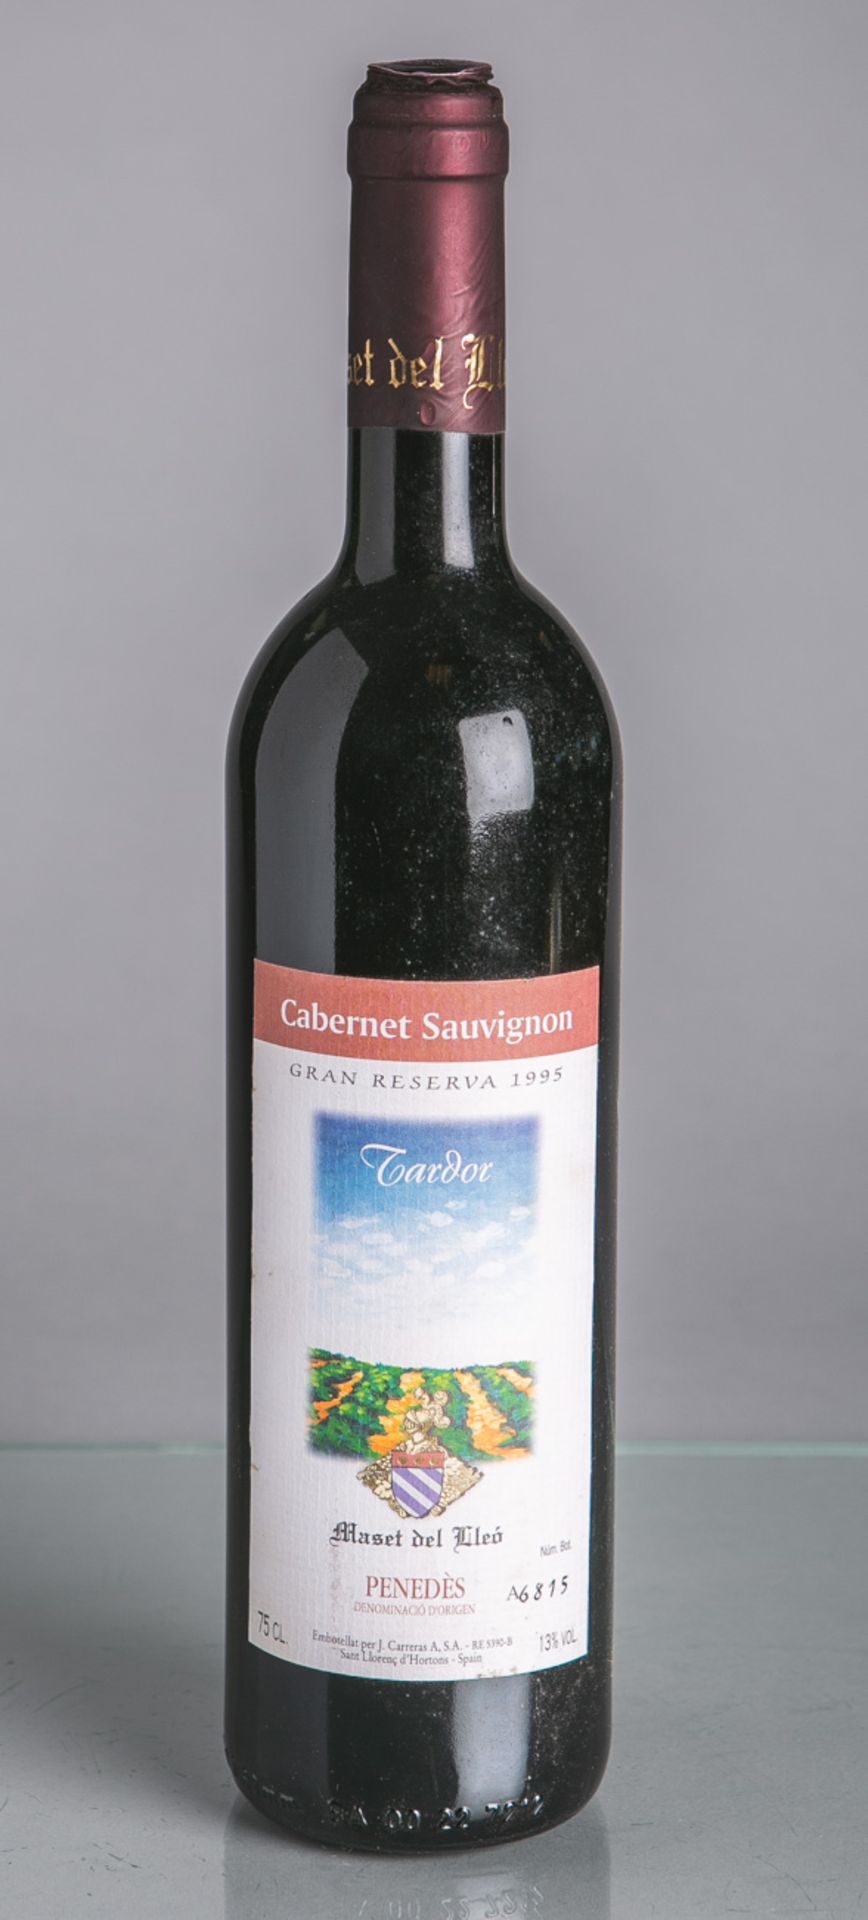 3 Flaschen von Tartor, Cabernet Sauvignon, Maset del Cleo, Gran Reserva (1995), Rotwein,je 0,75 L.